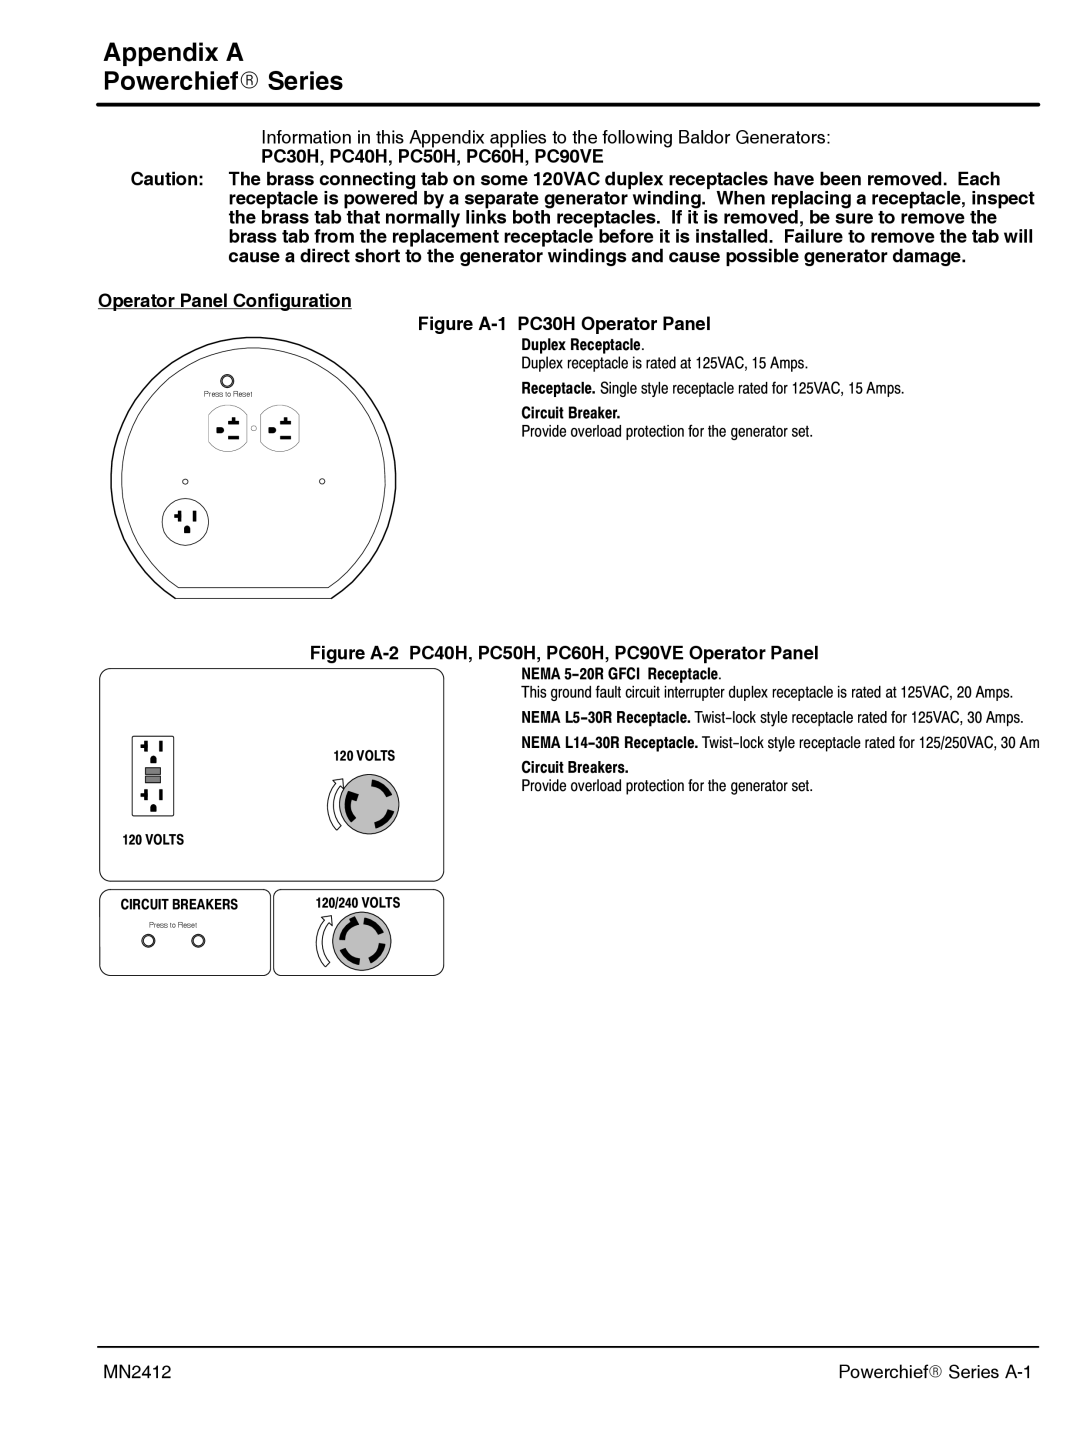 Baldor MN2412 manual Appendix a PowerchiefR Series, Figure A-1 PC30H Operator Panel 